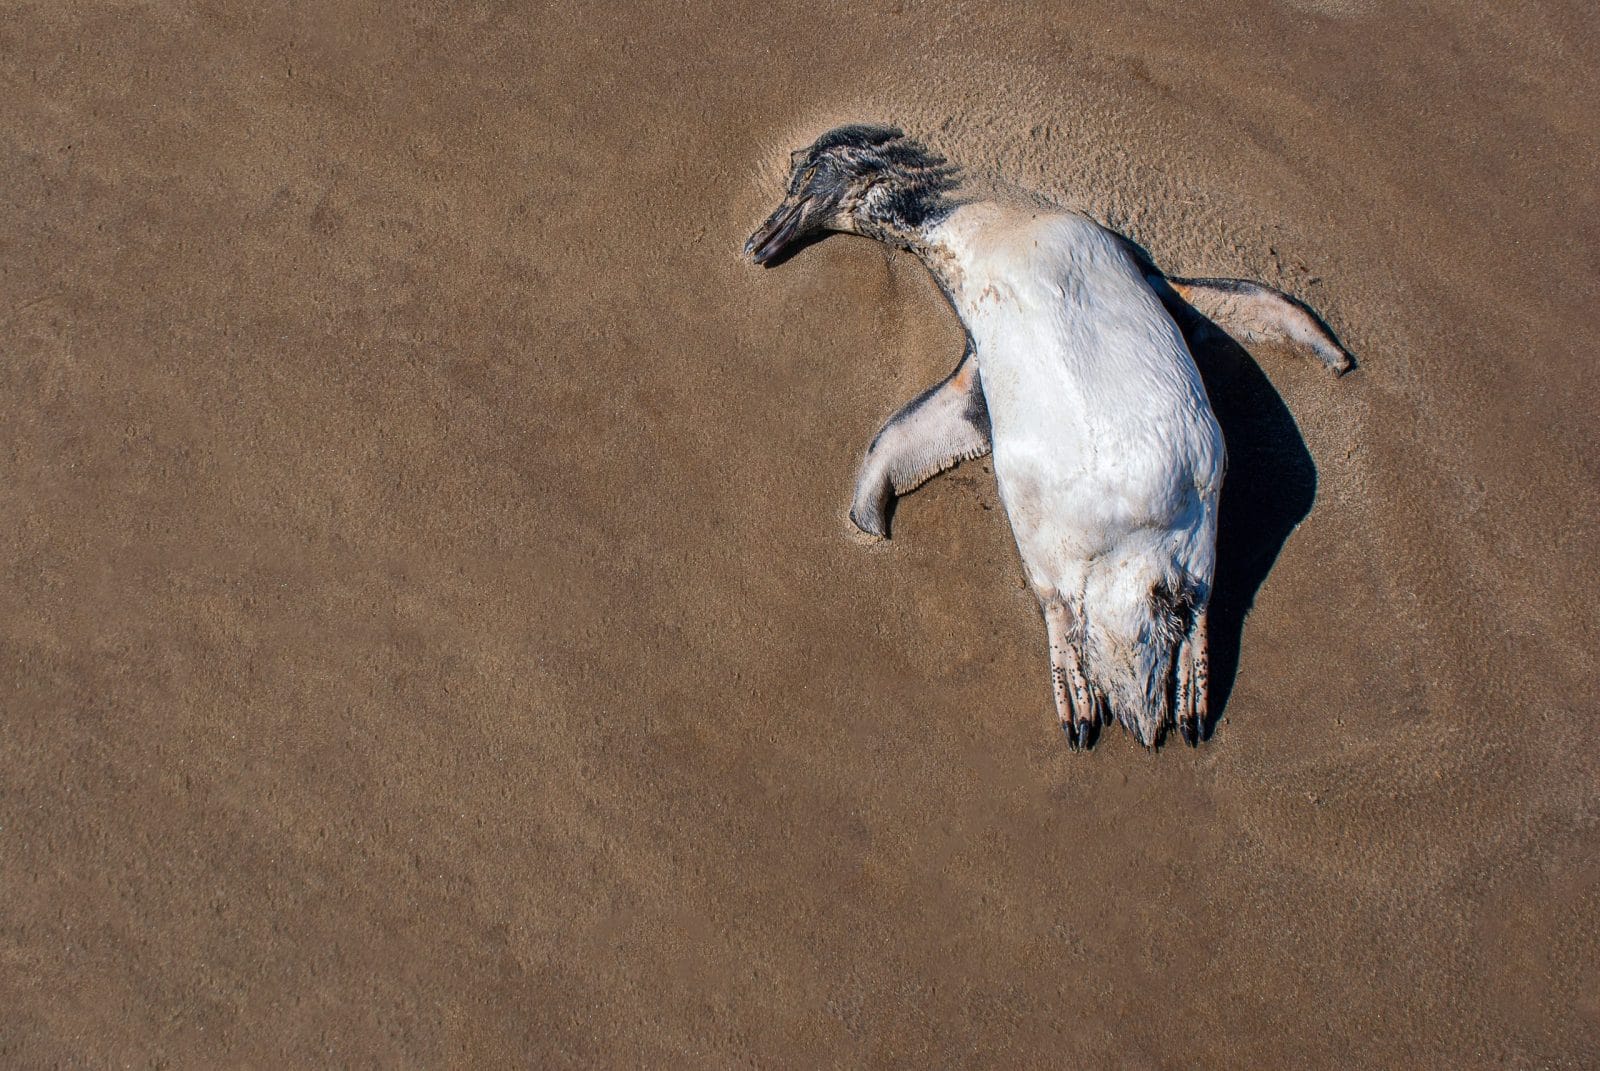 Dead penguin washed on shore